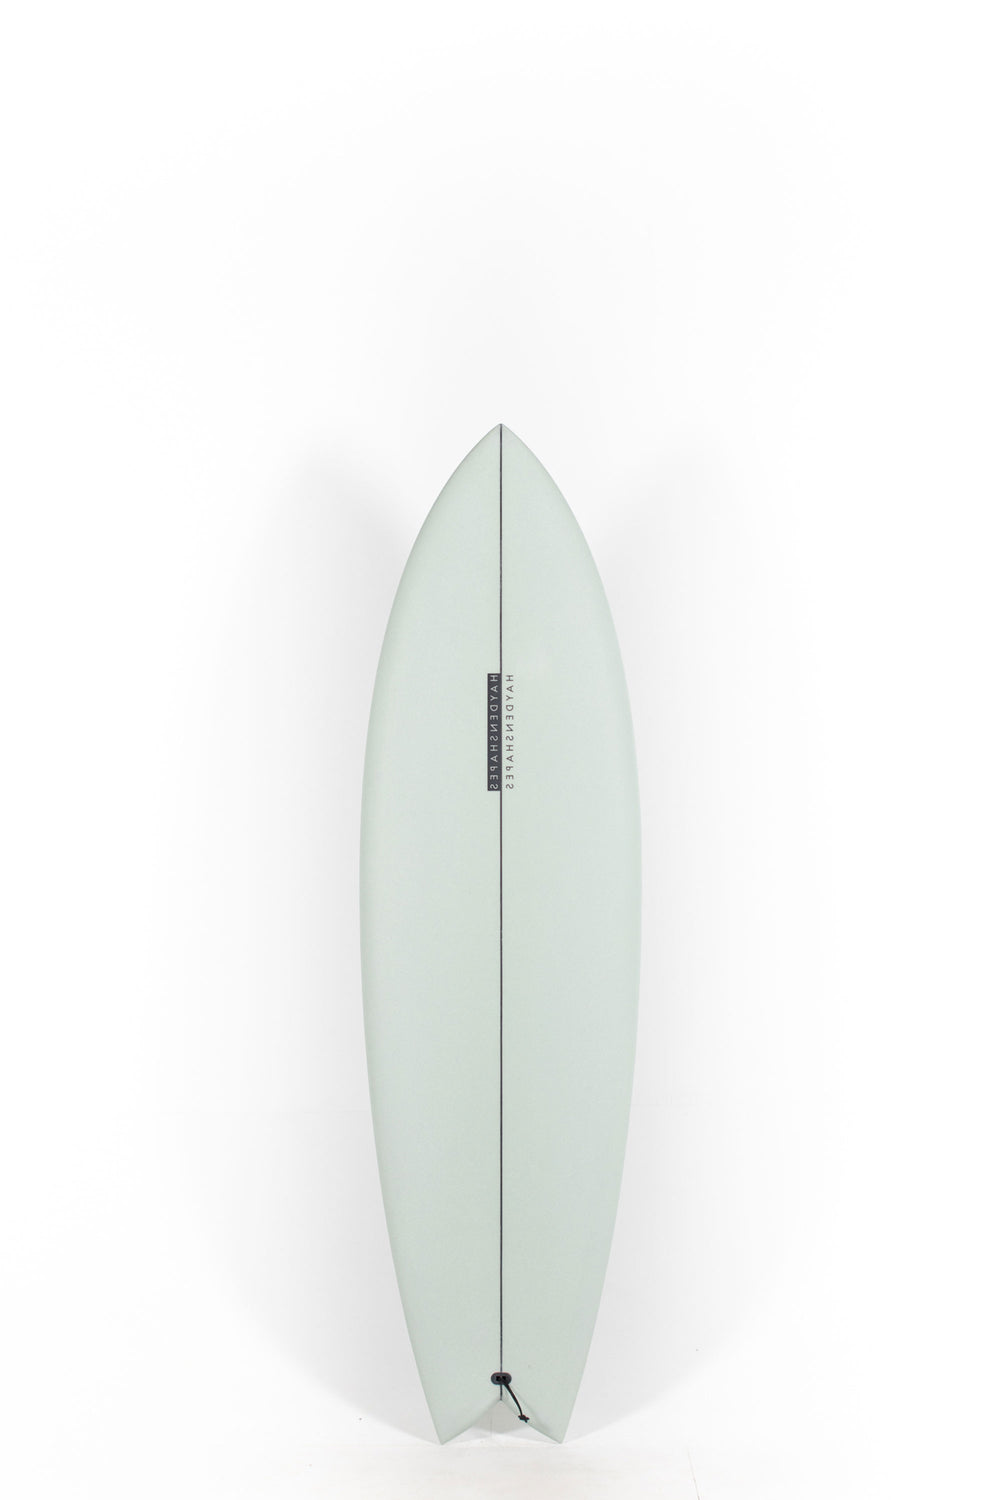 HaydenShapes Surfboard - HYPTO KRYPTO TWIN PU - 6'4